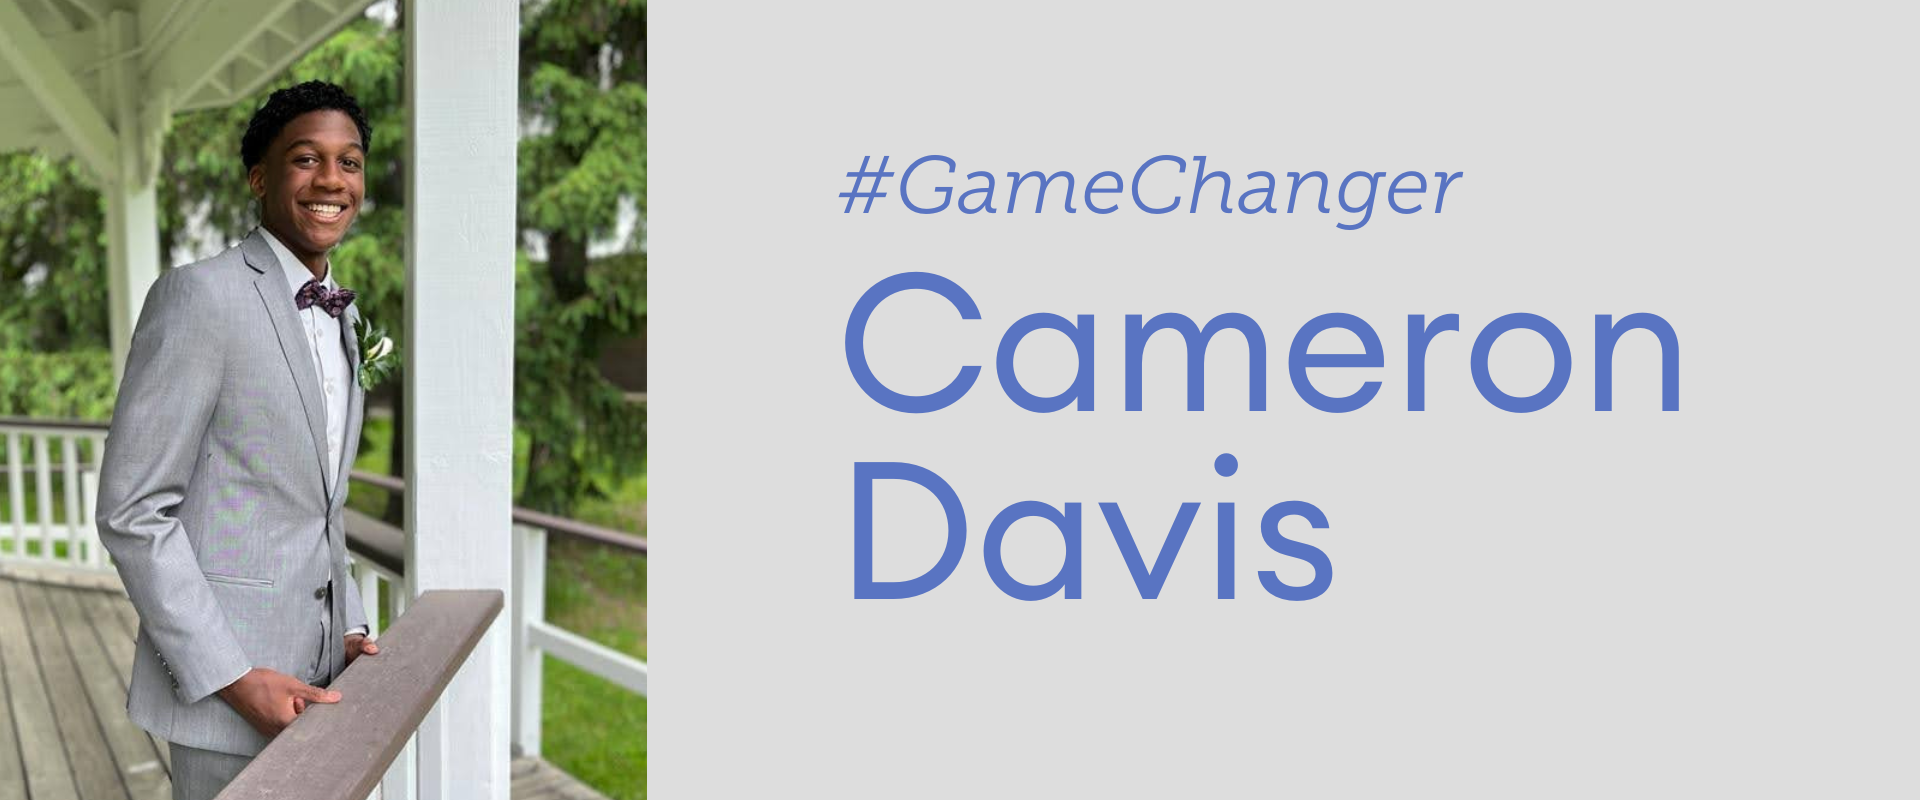 Banner photo of Cameron Davis in a grey smiling. Words next to the image: "#Gamechanger Cameron Davis"